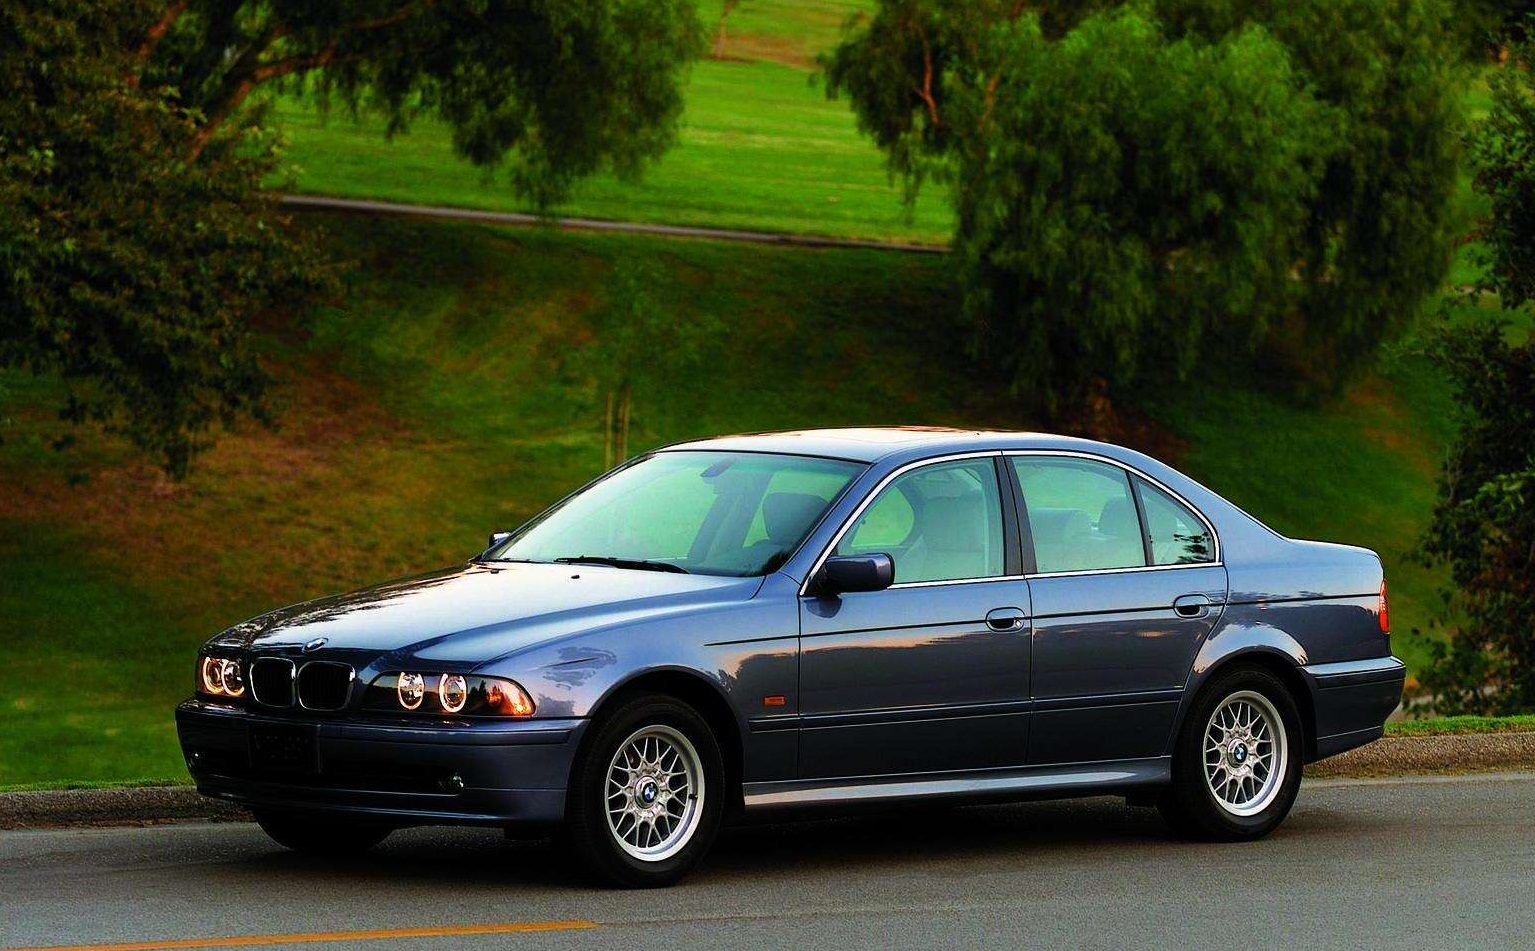 BMW - Populaire français d'automobiles: 2001 BMW 5 Series